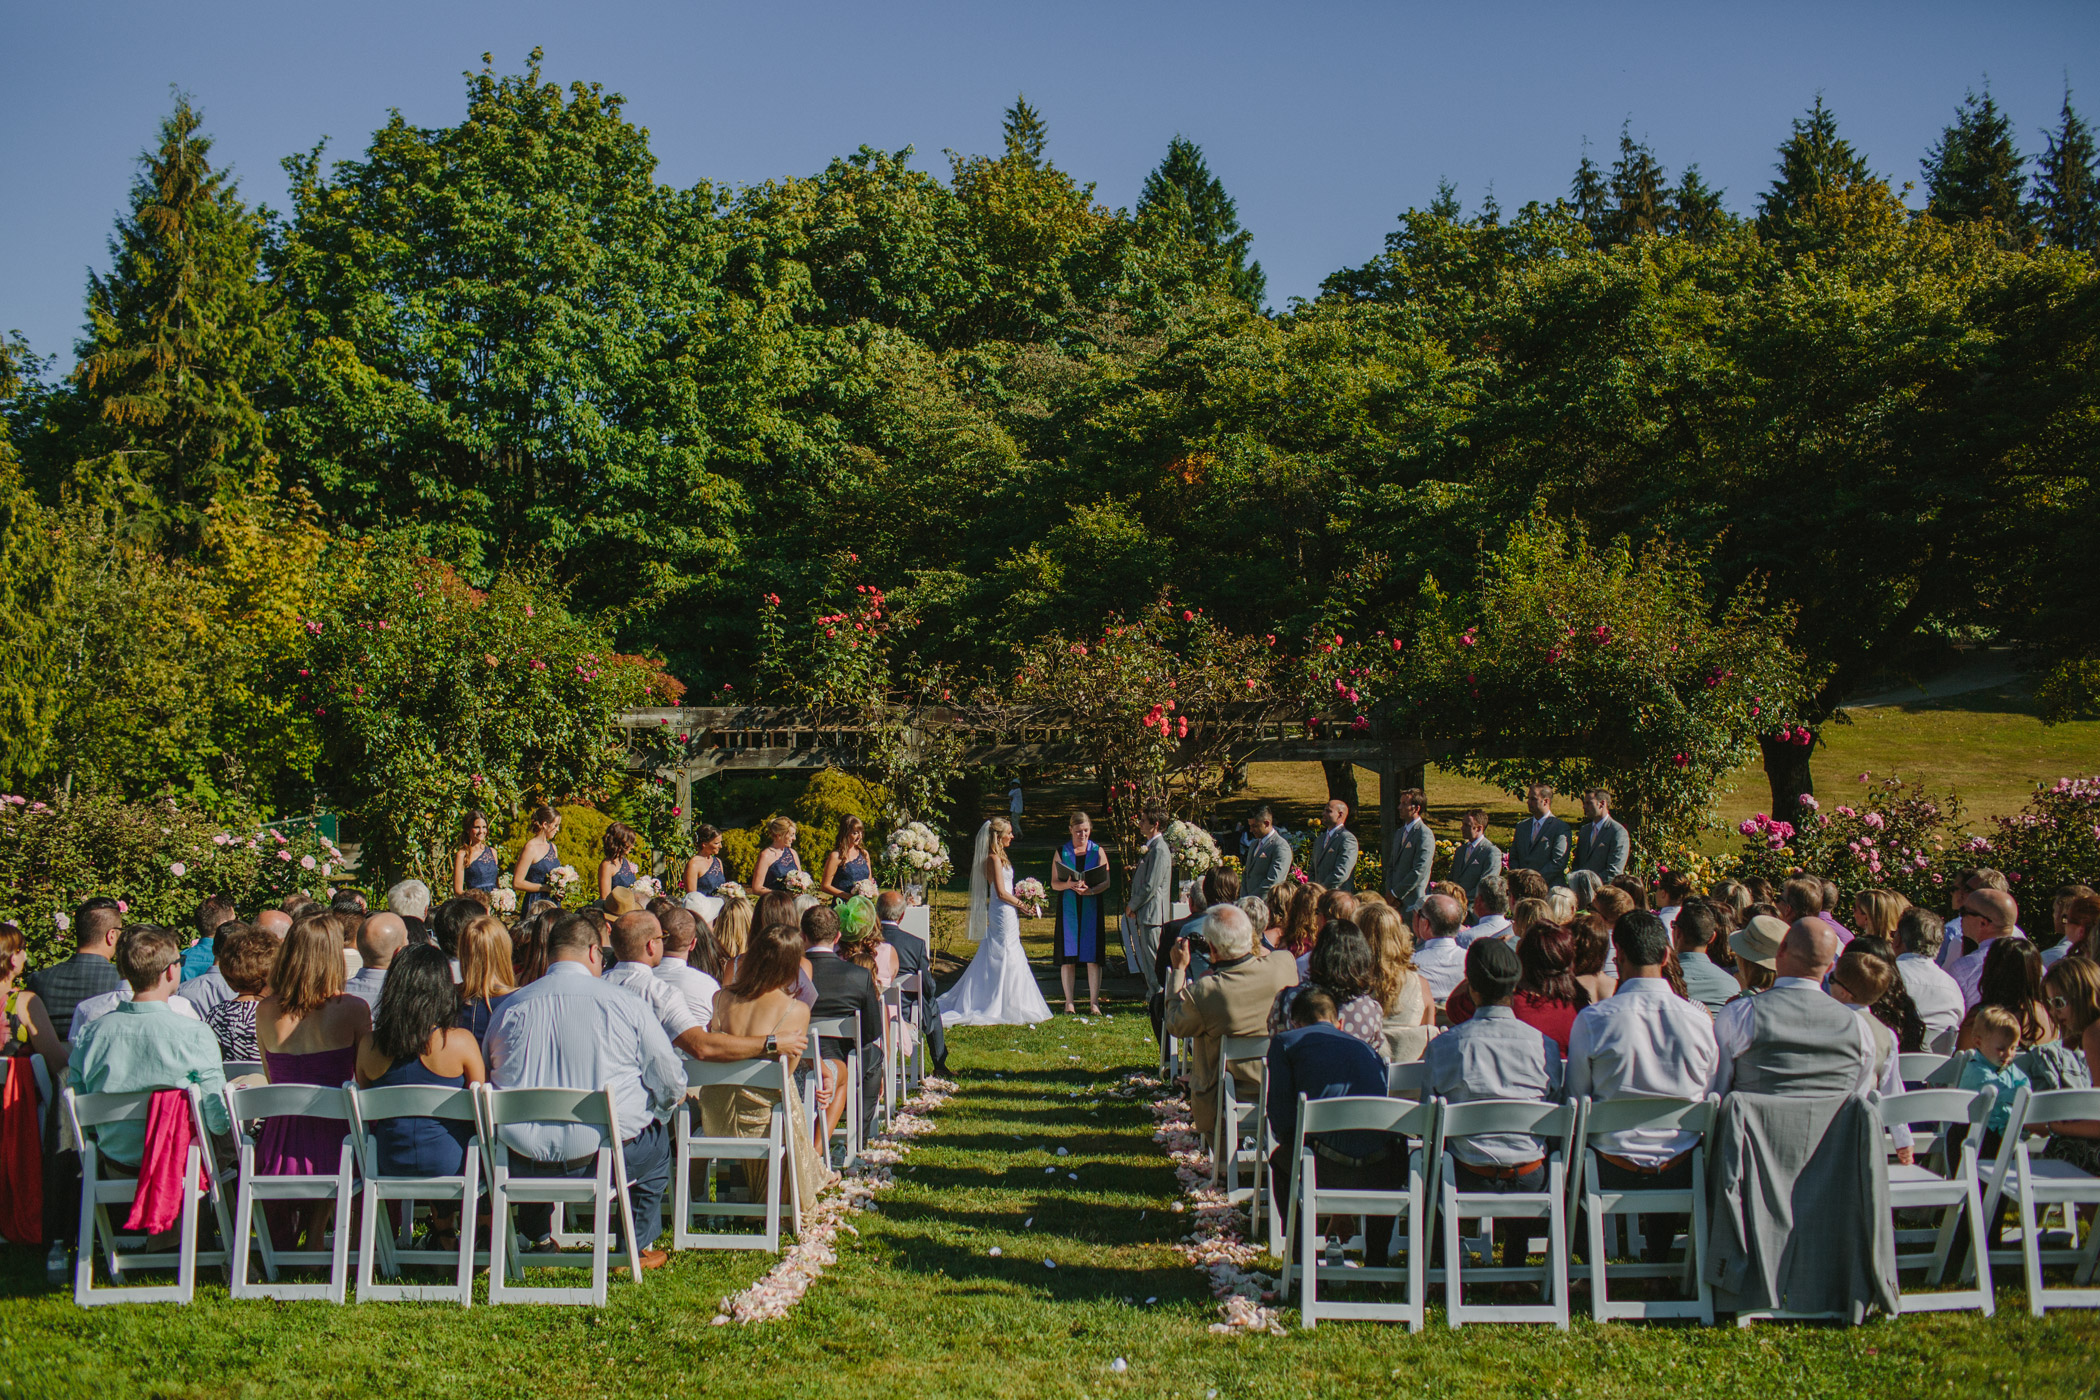 Burnaby Mountain Rose Garden wedding Ceremony